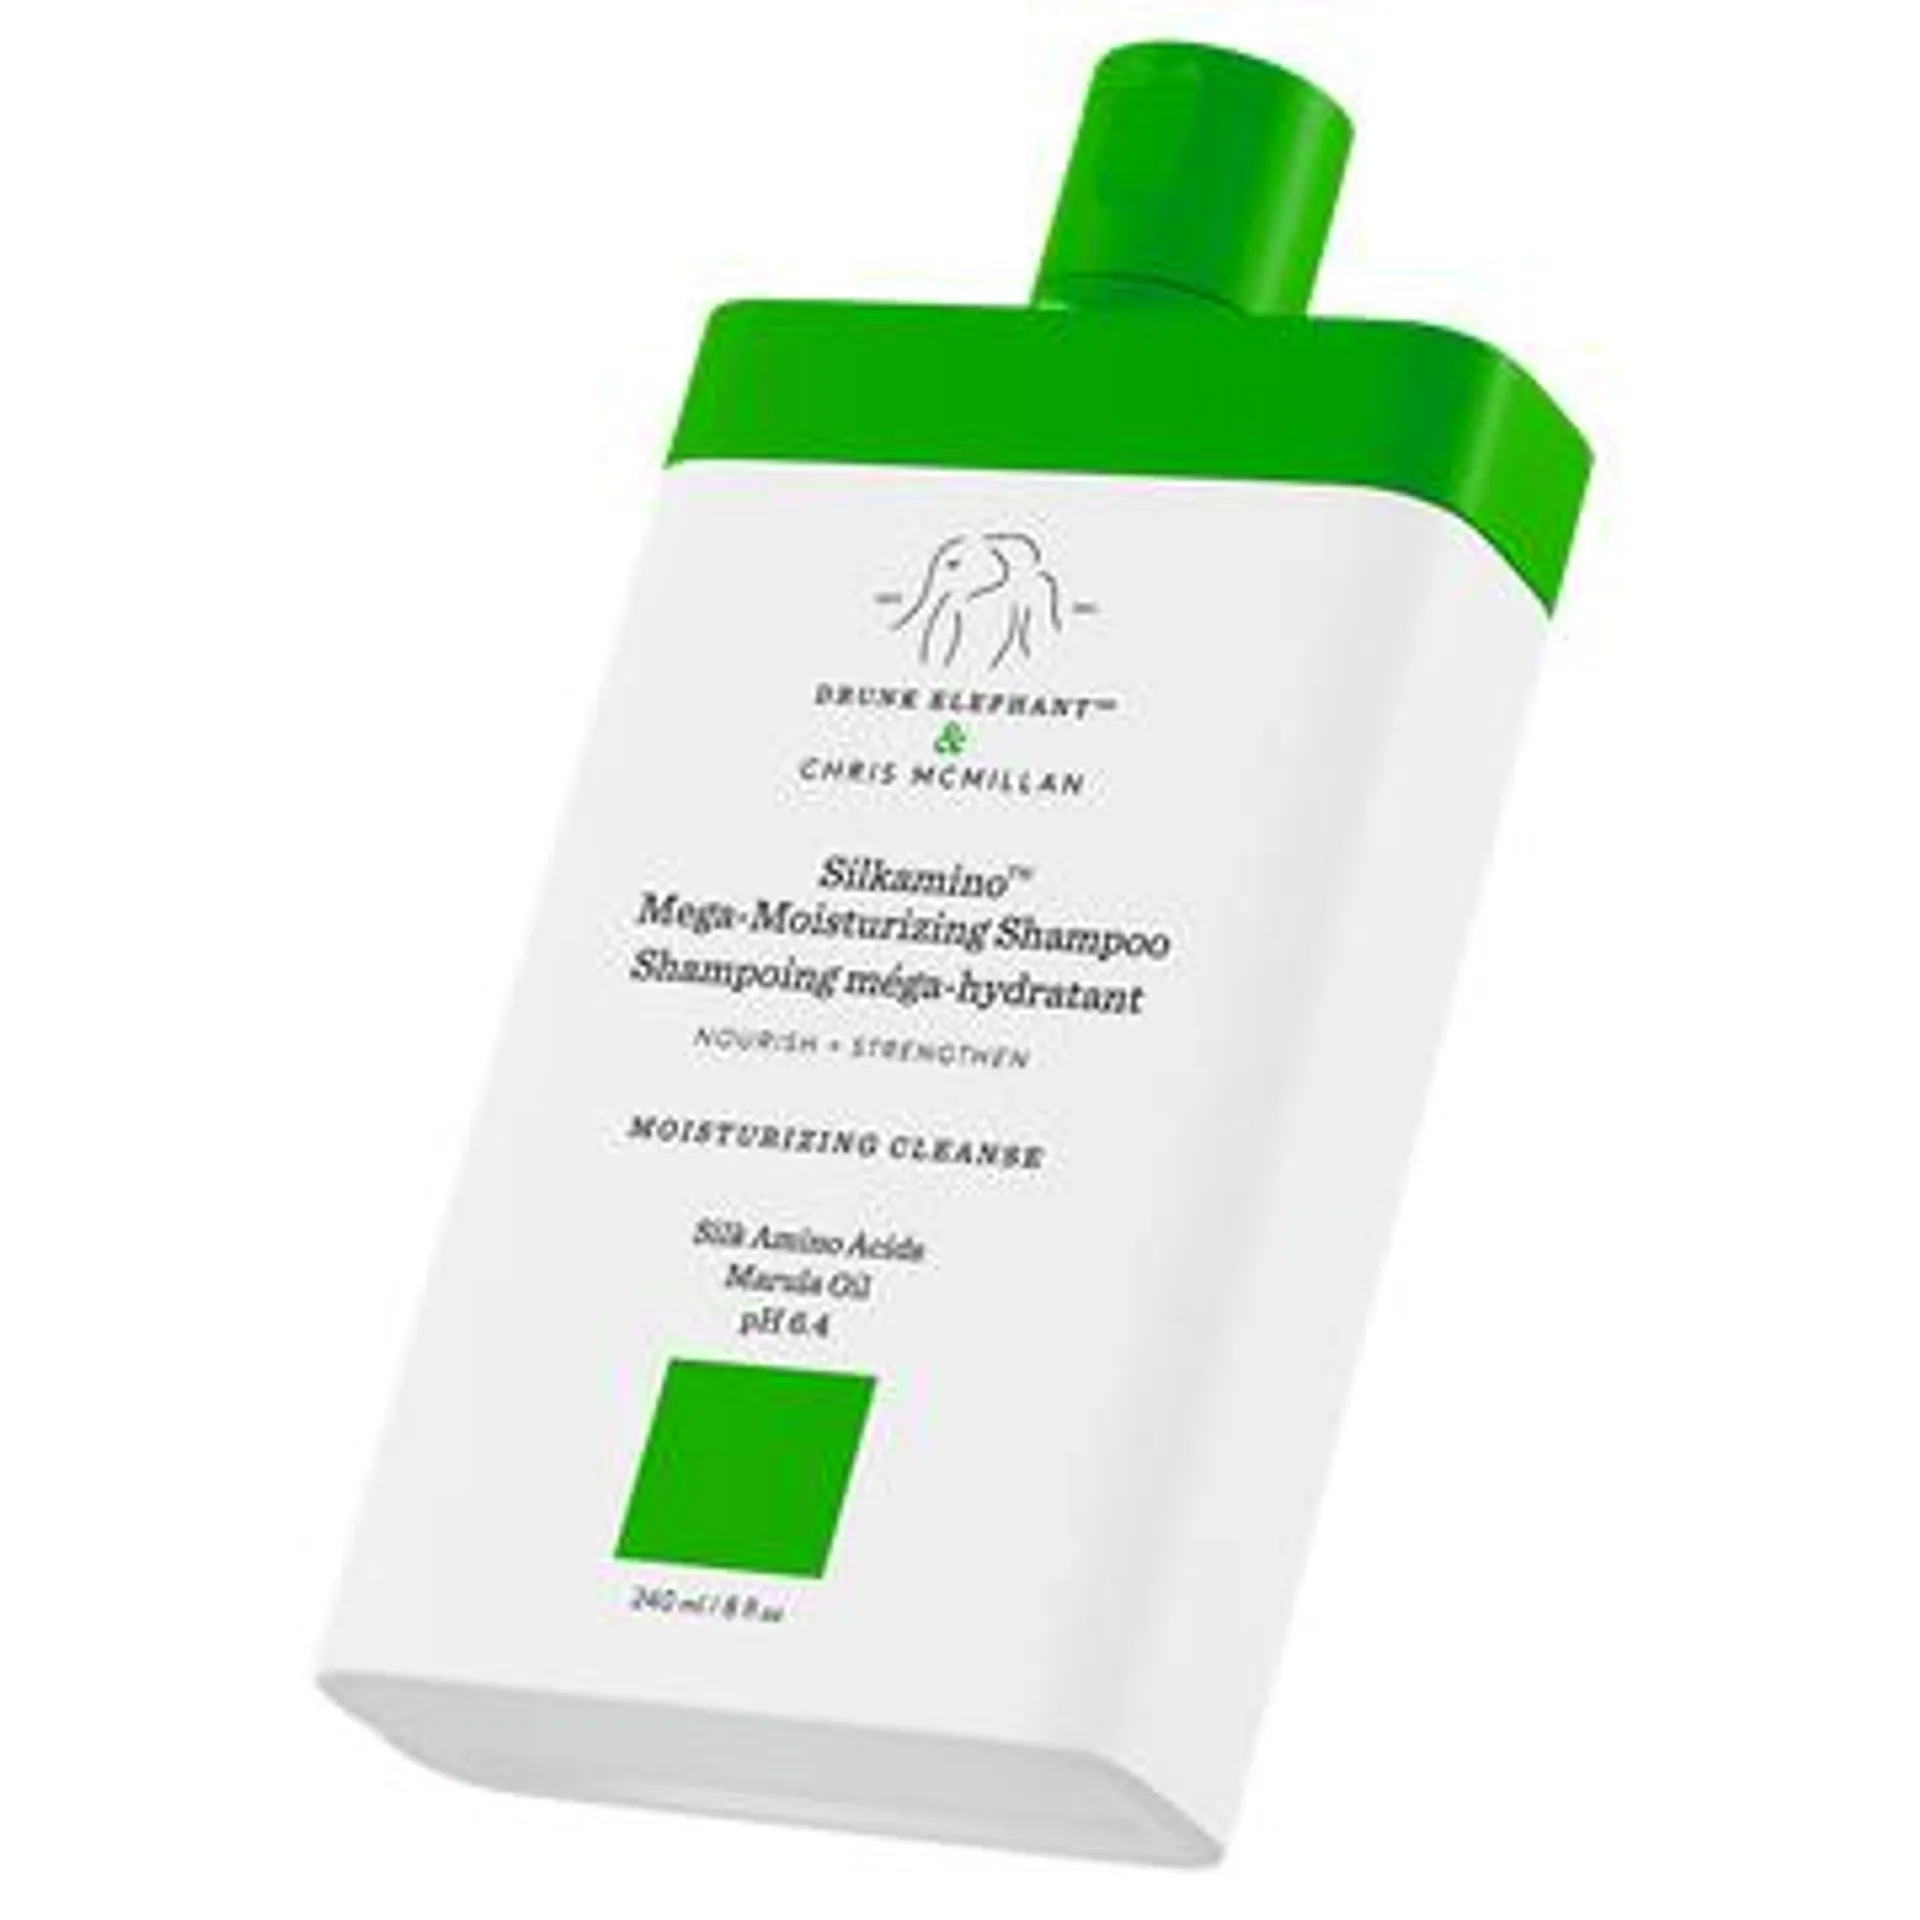 Silkamino™ Mega-Moisturizing Shampoo